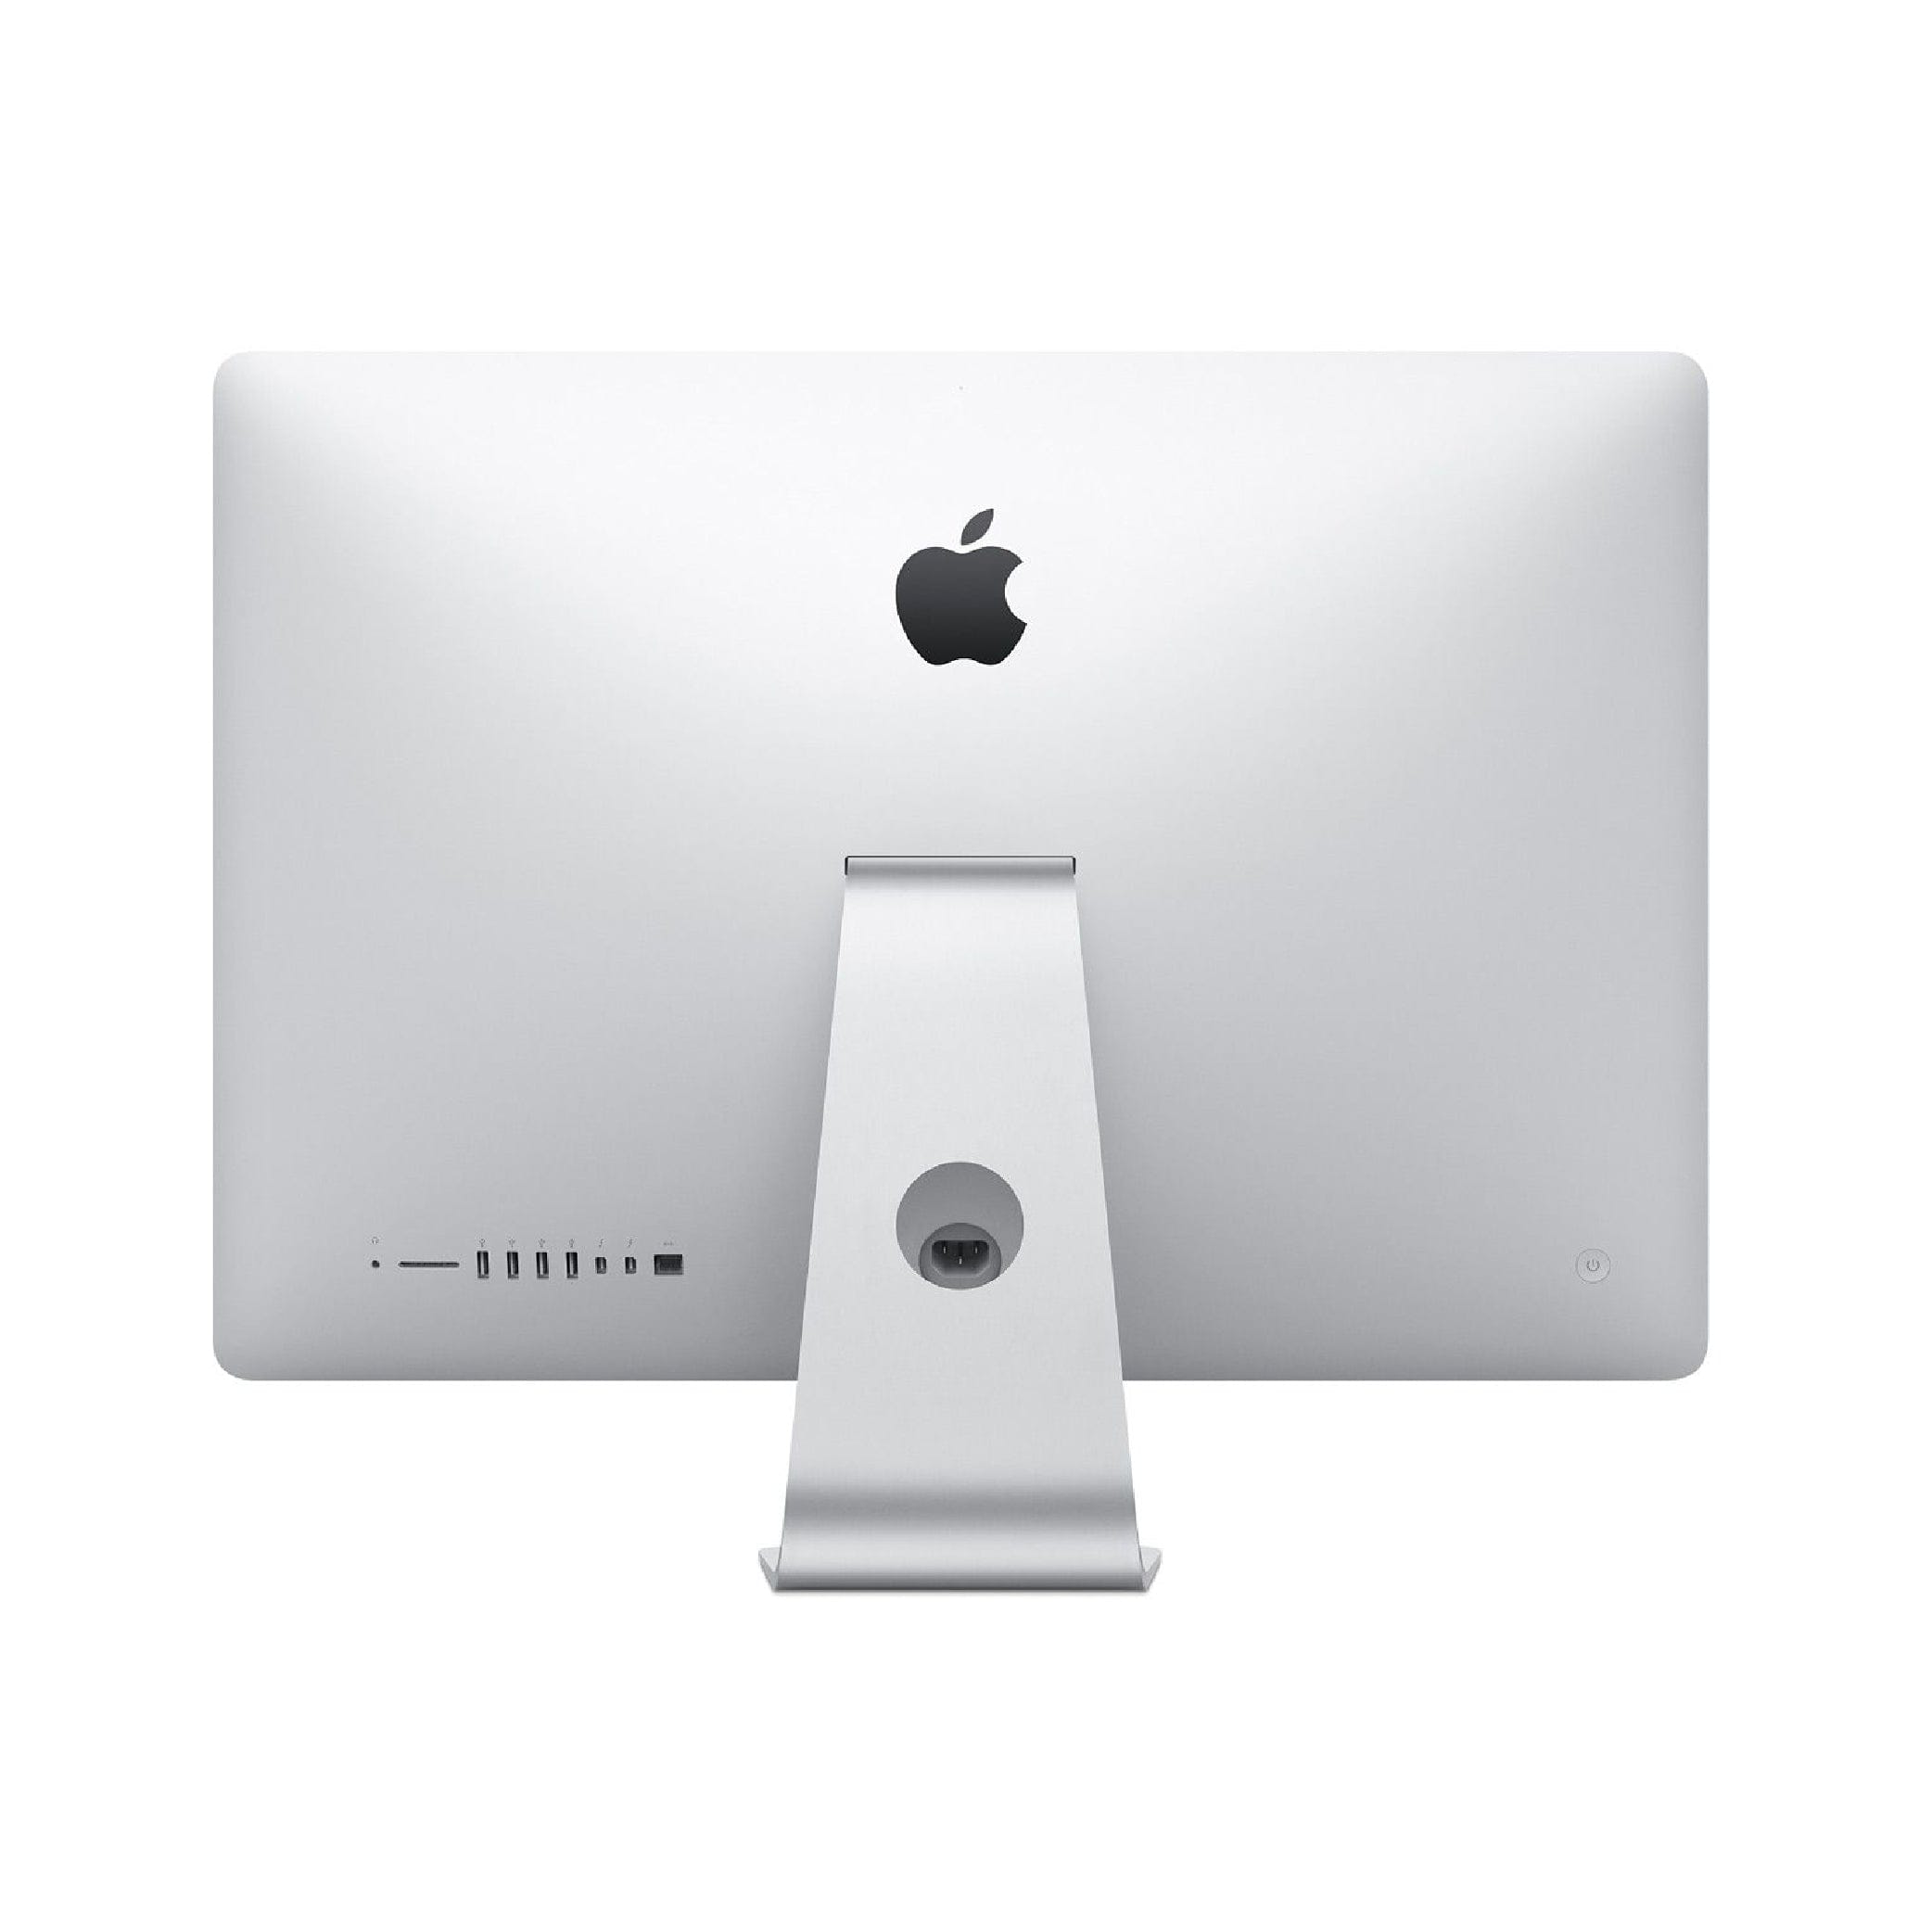 Apple iMac 27-inch Retina 5K display (2020) - Intel Core i7 (3.8GHz) - 8GB - 512GB SSD - MXWV2LL/A - Silver